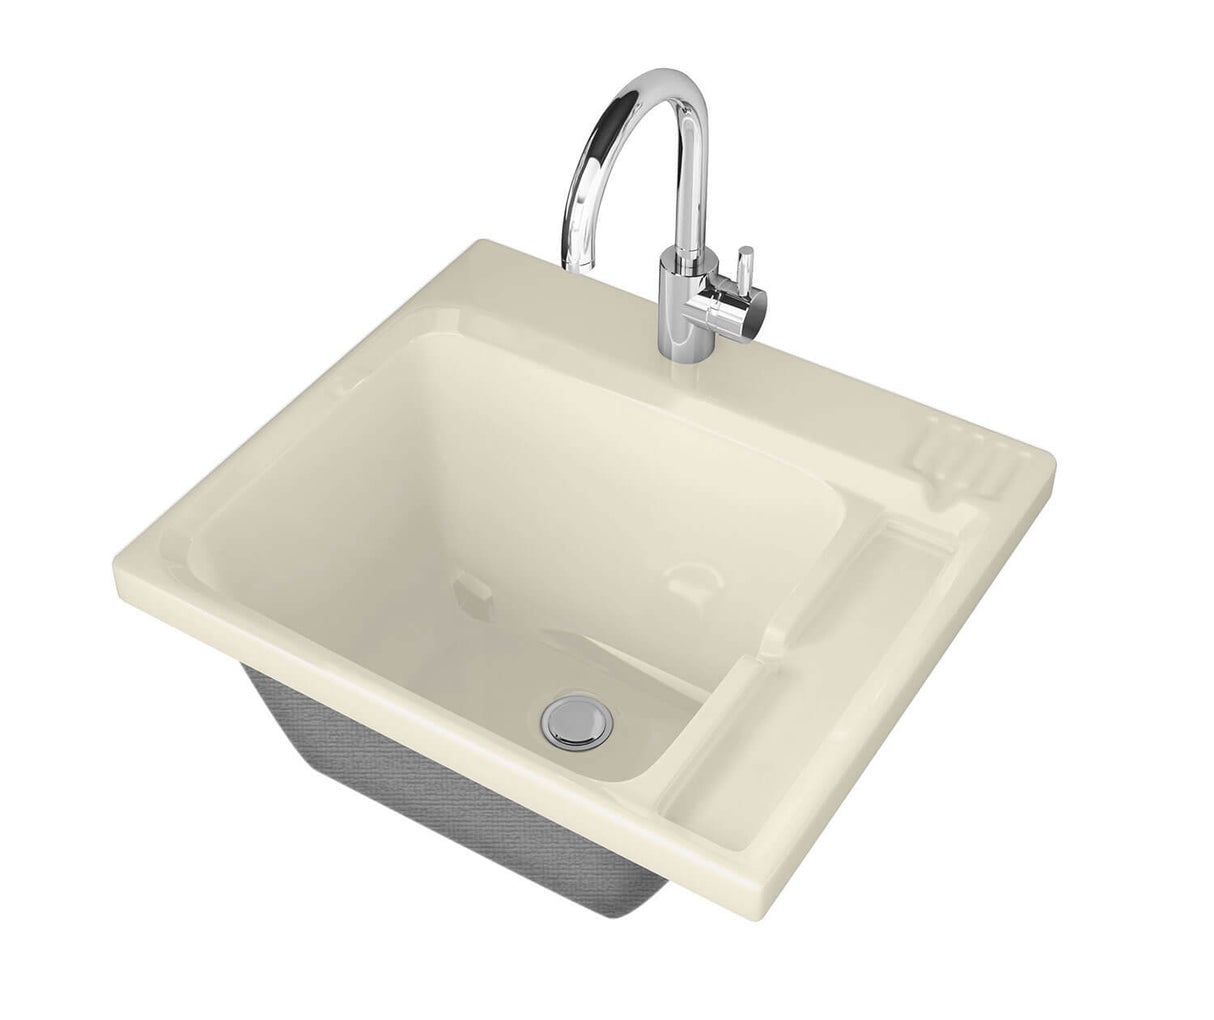 MAAX 101179-000-004-000 Evia 25 x 22 Acrylic Single Bowl Sink in Bone